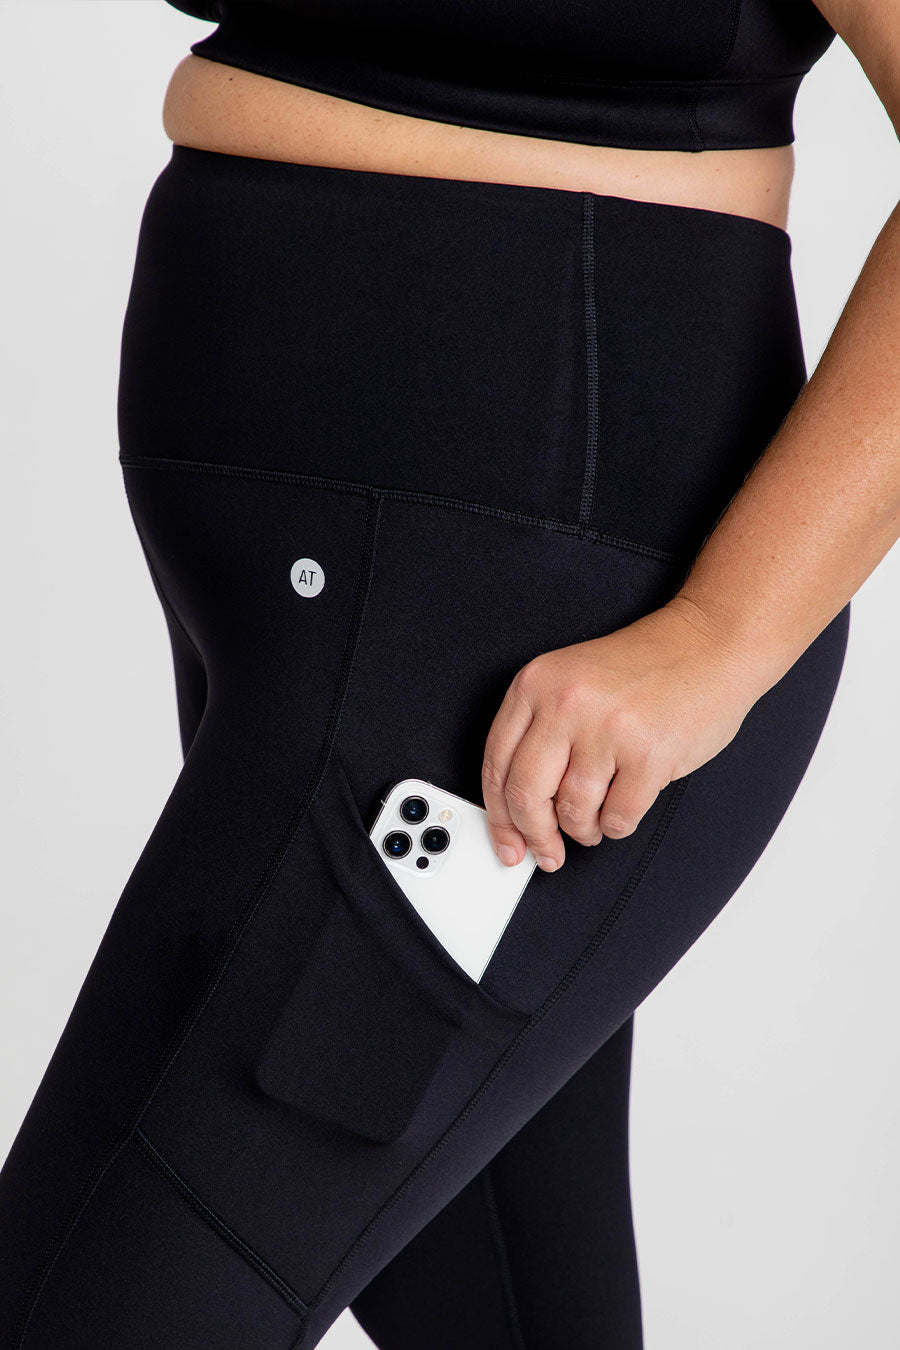 Smart Pocket Full Length Tight - Black